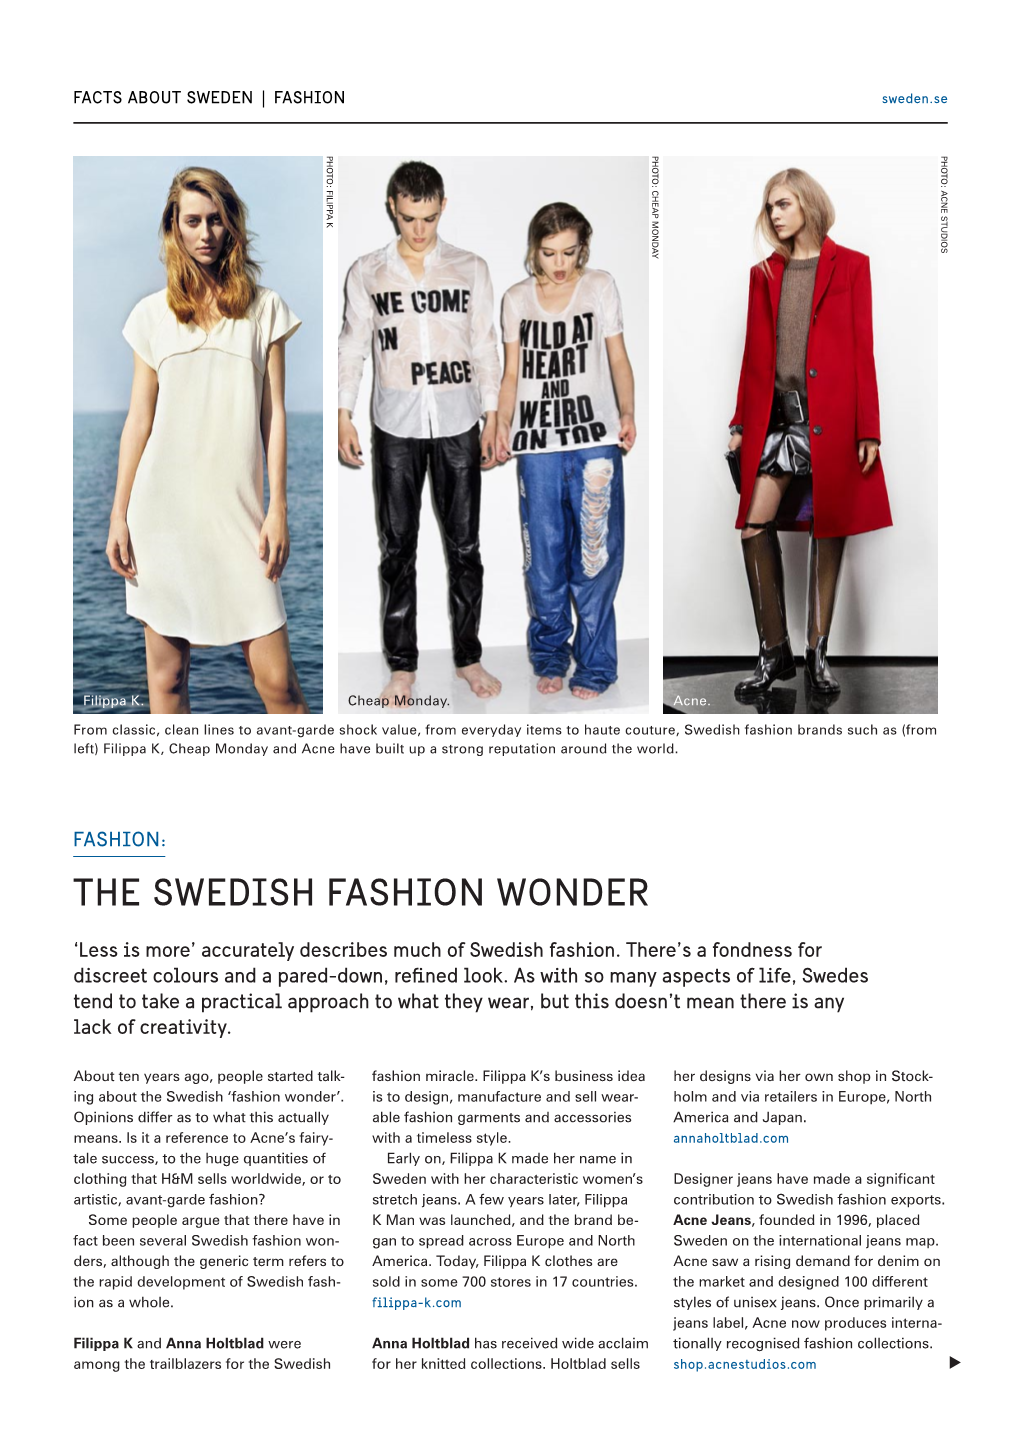 The Swedish Fashion Wonder